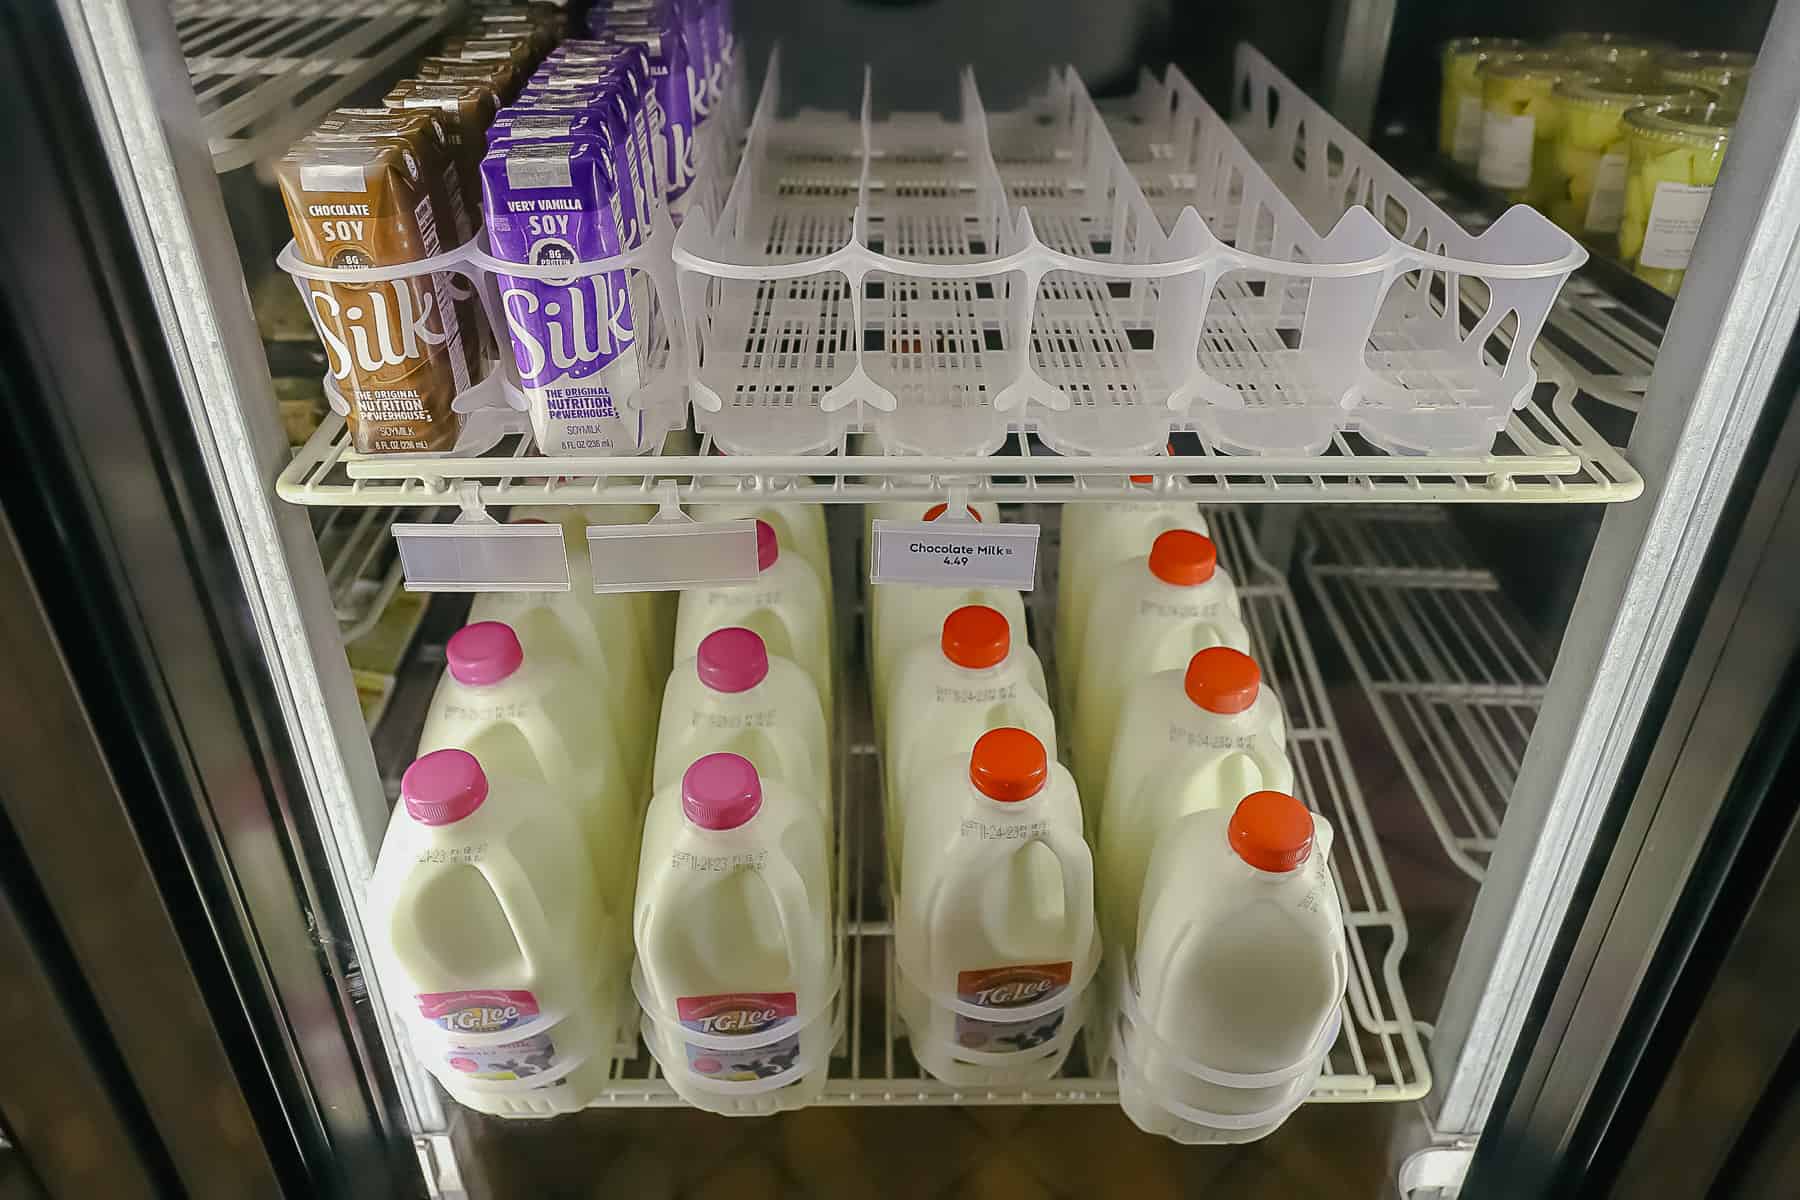  regular milk and soy milk 